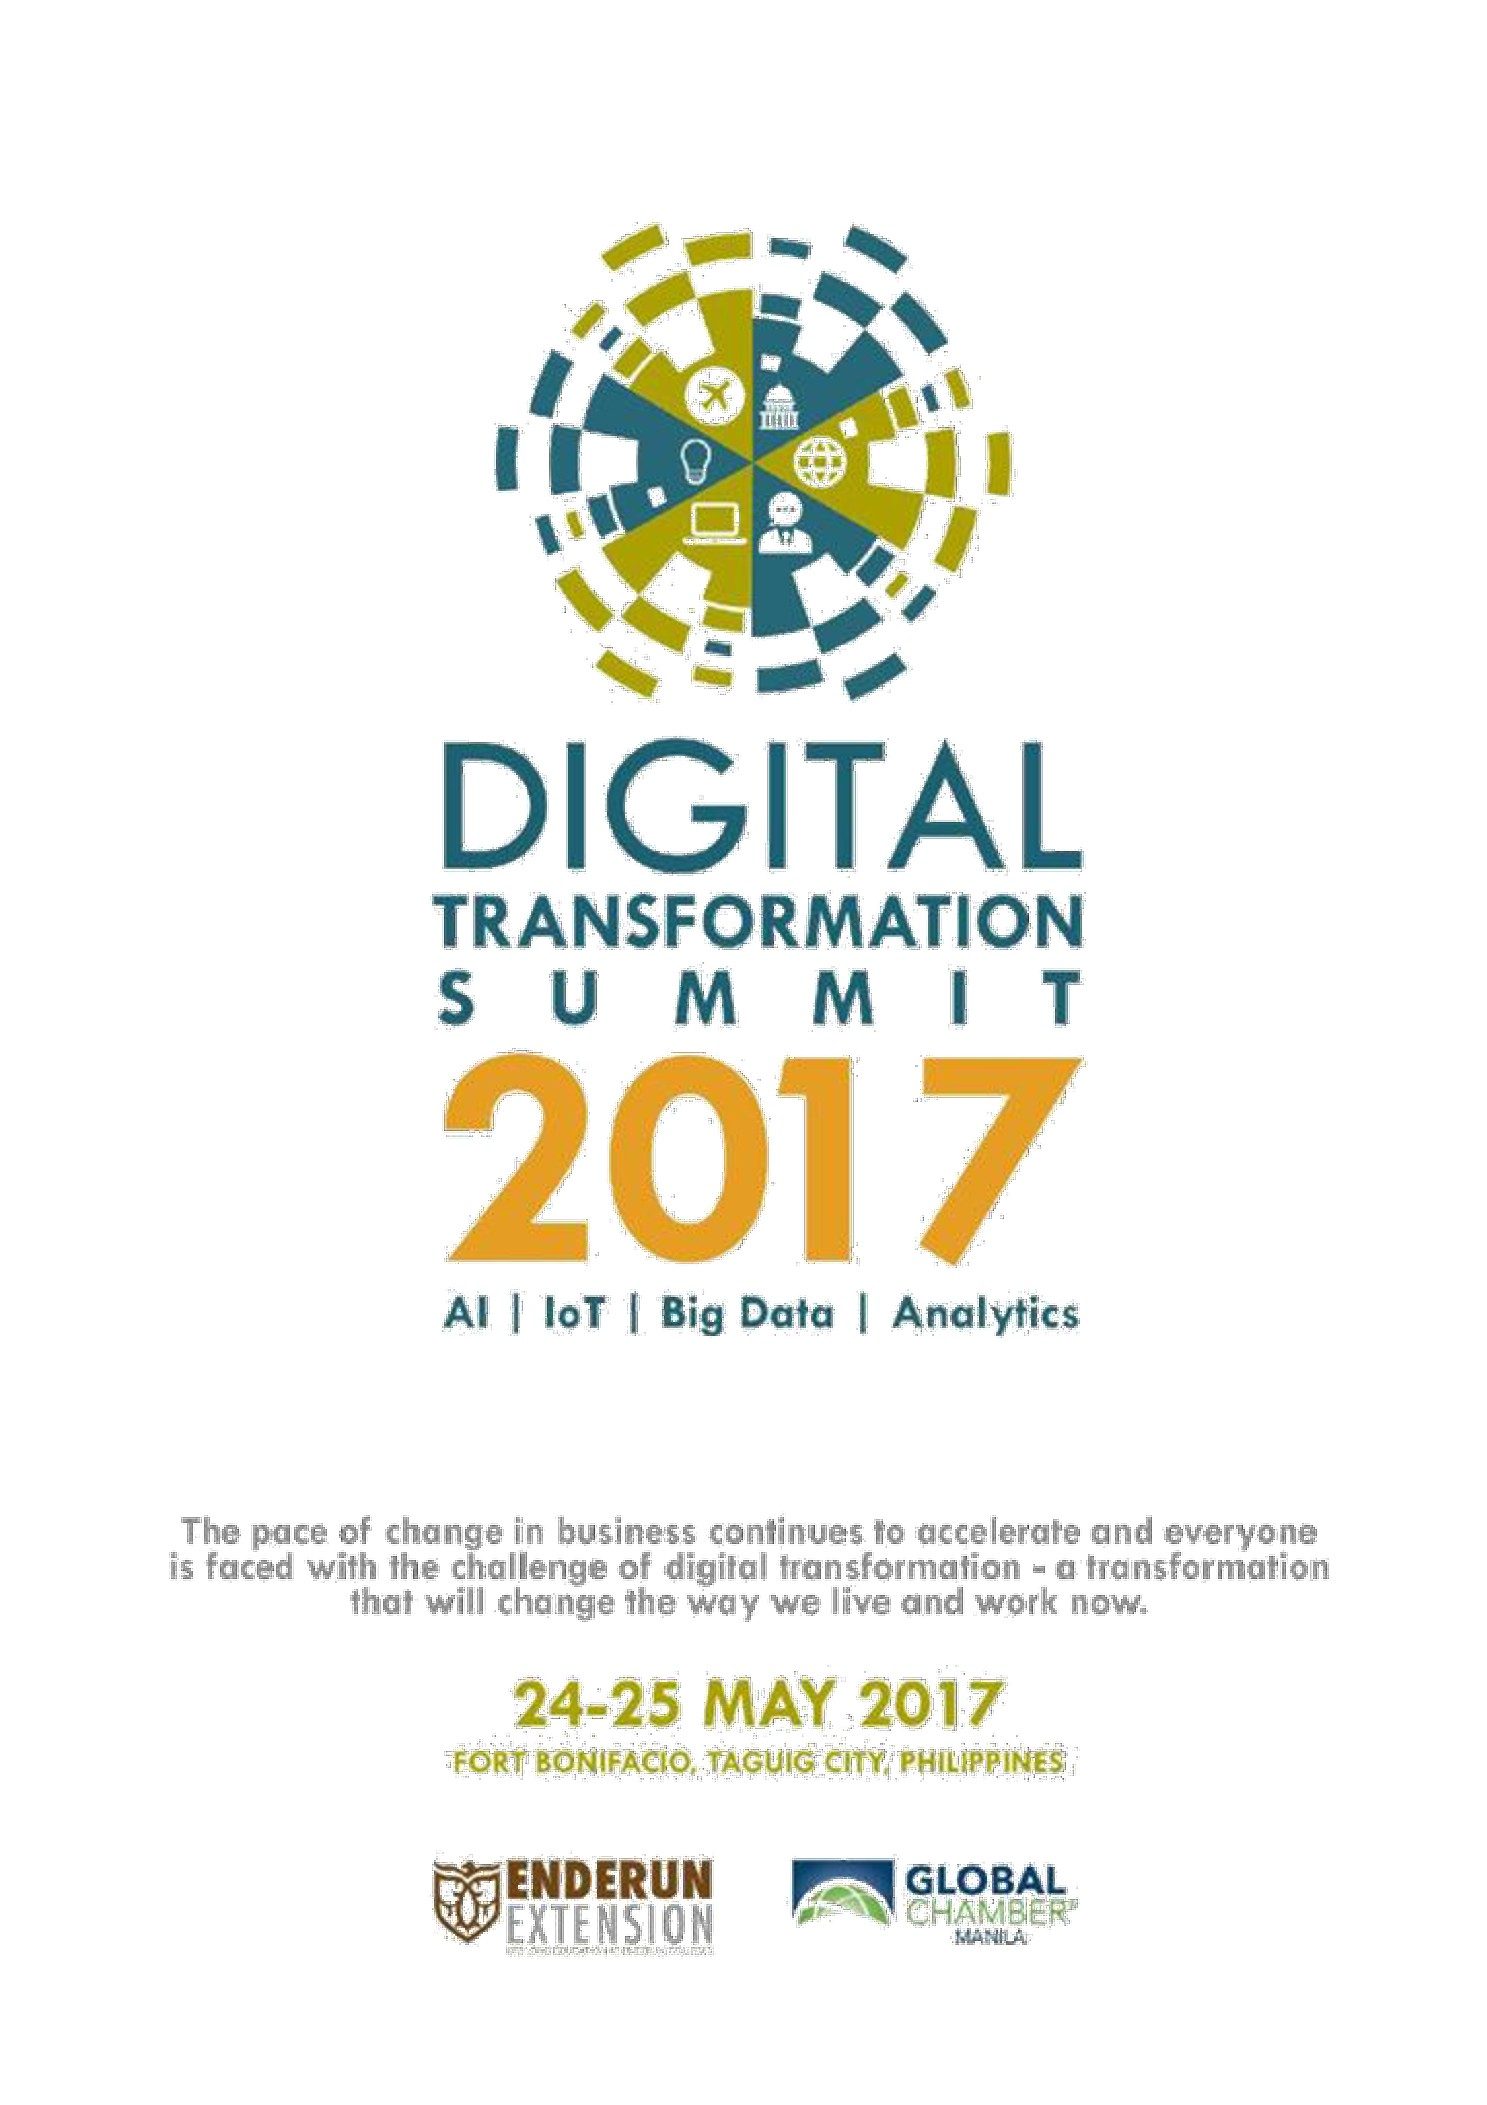 Enderun Colleges mounts Digital Transformation Summit 2017